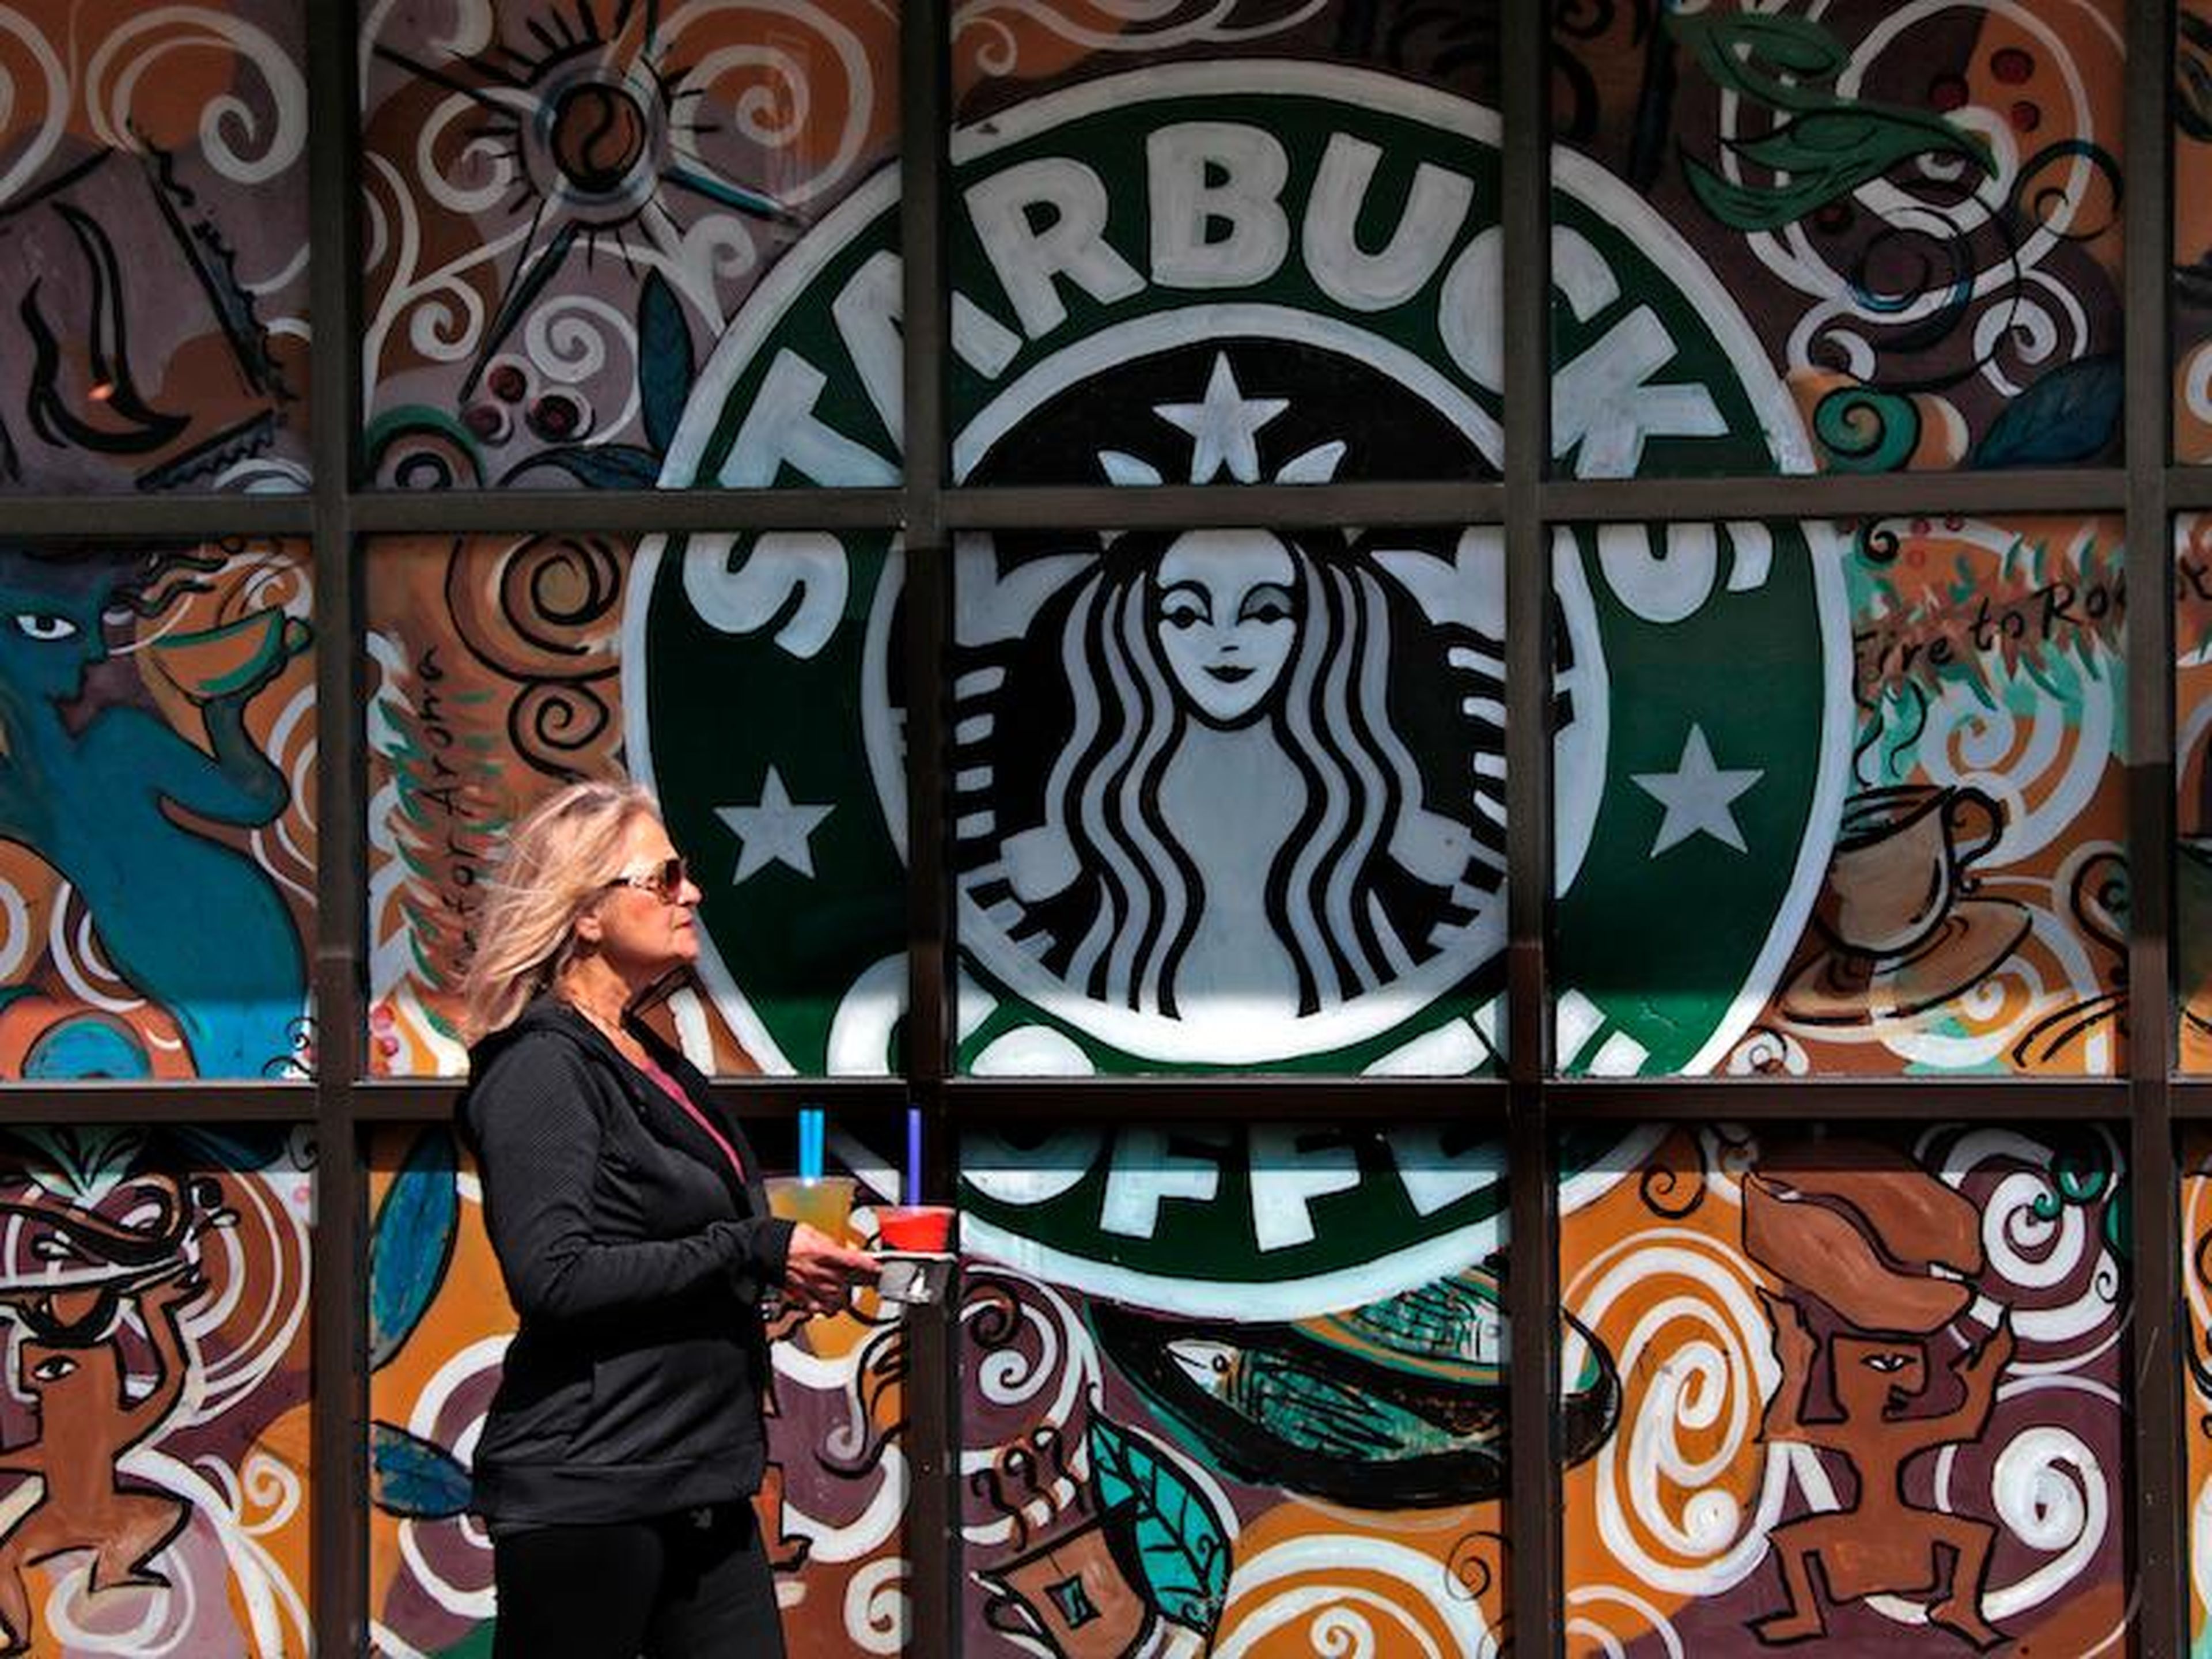 Schultz grew Starbucks into a giant, multinational company.